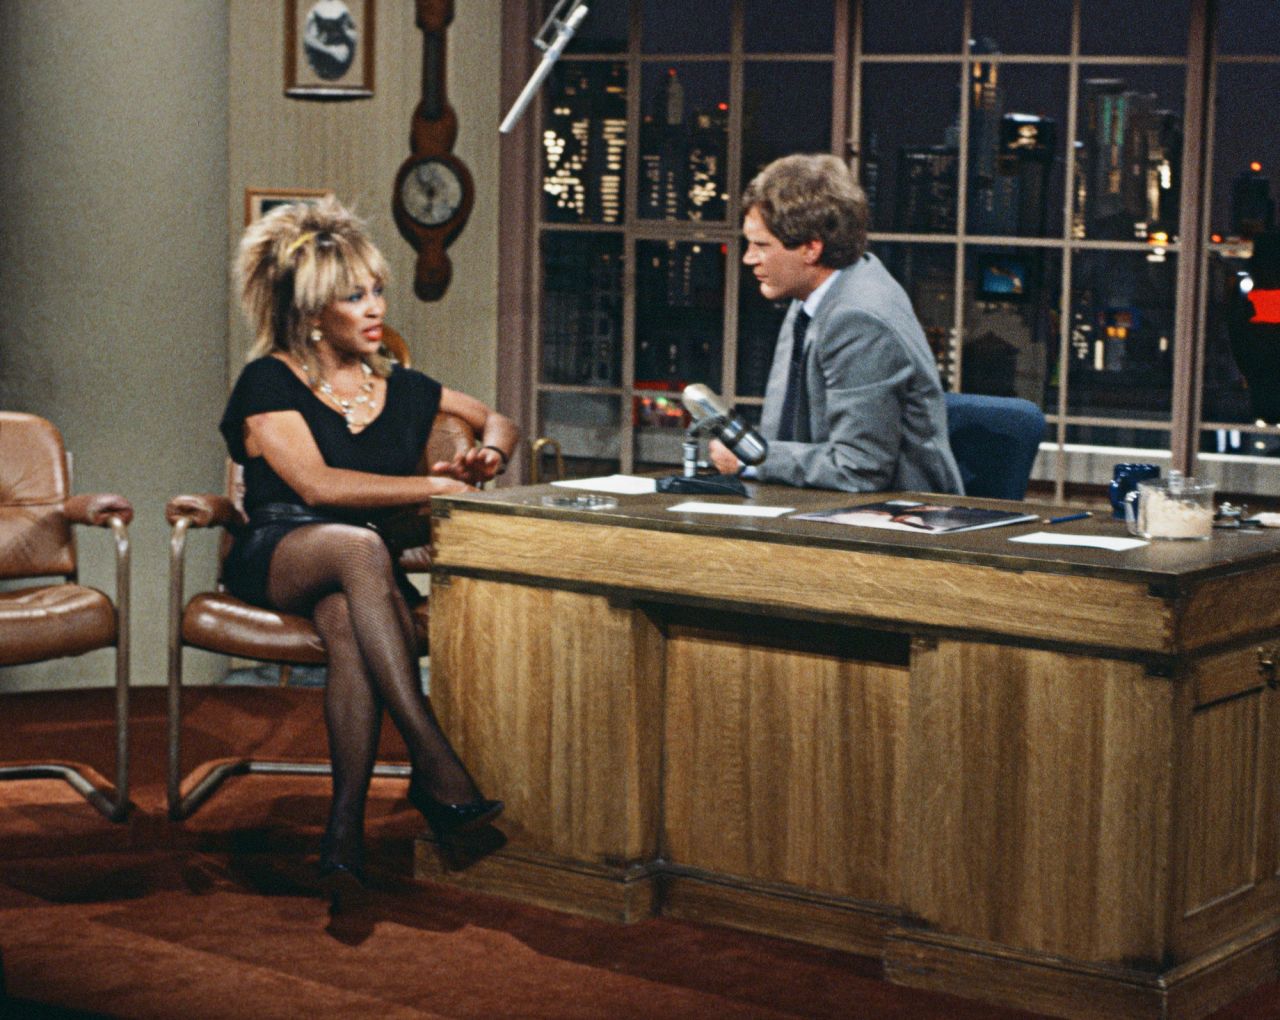 Letterman interviews singer Tina Turner in 1984.